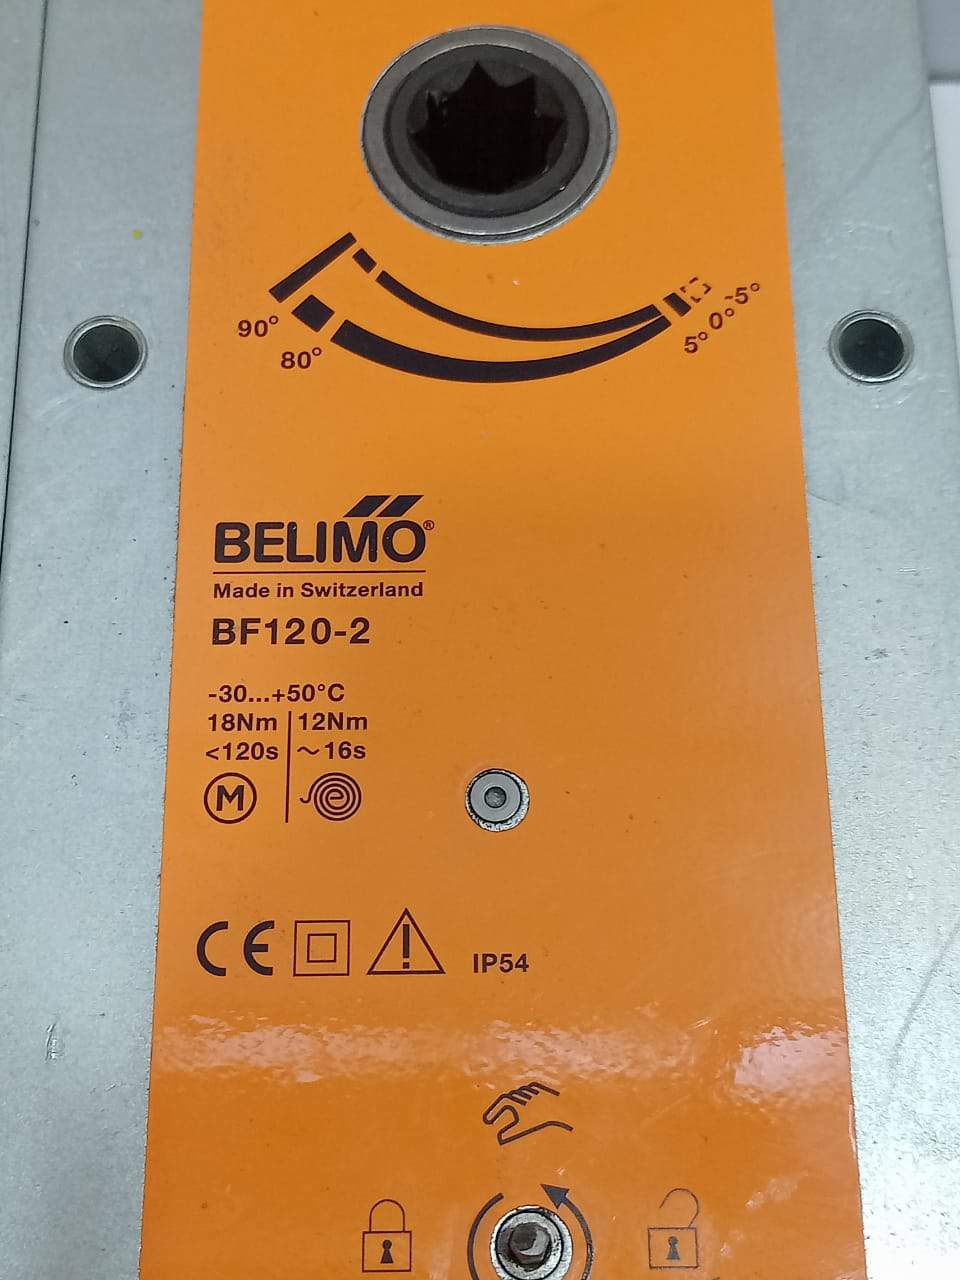 Belimo BF120-2 Spring Return On-Off Fire & Smoke Damper Actuator